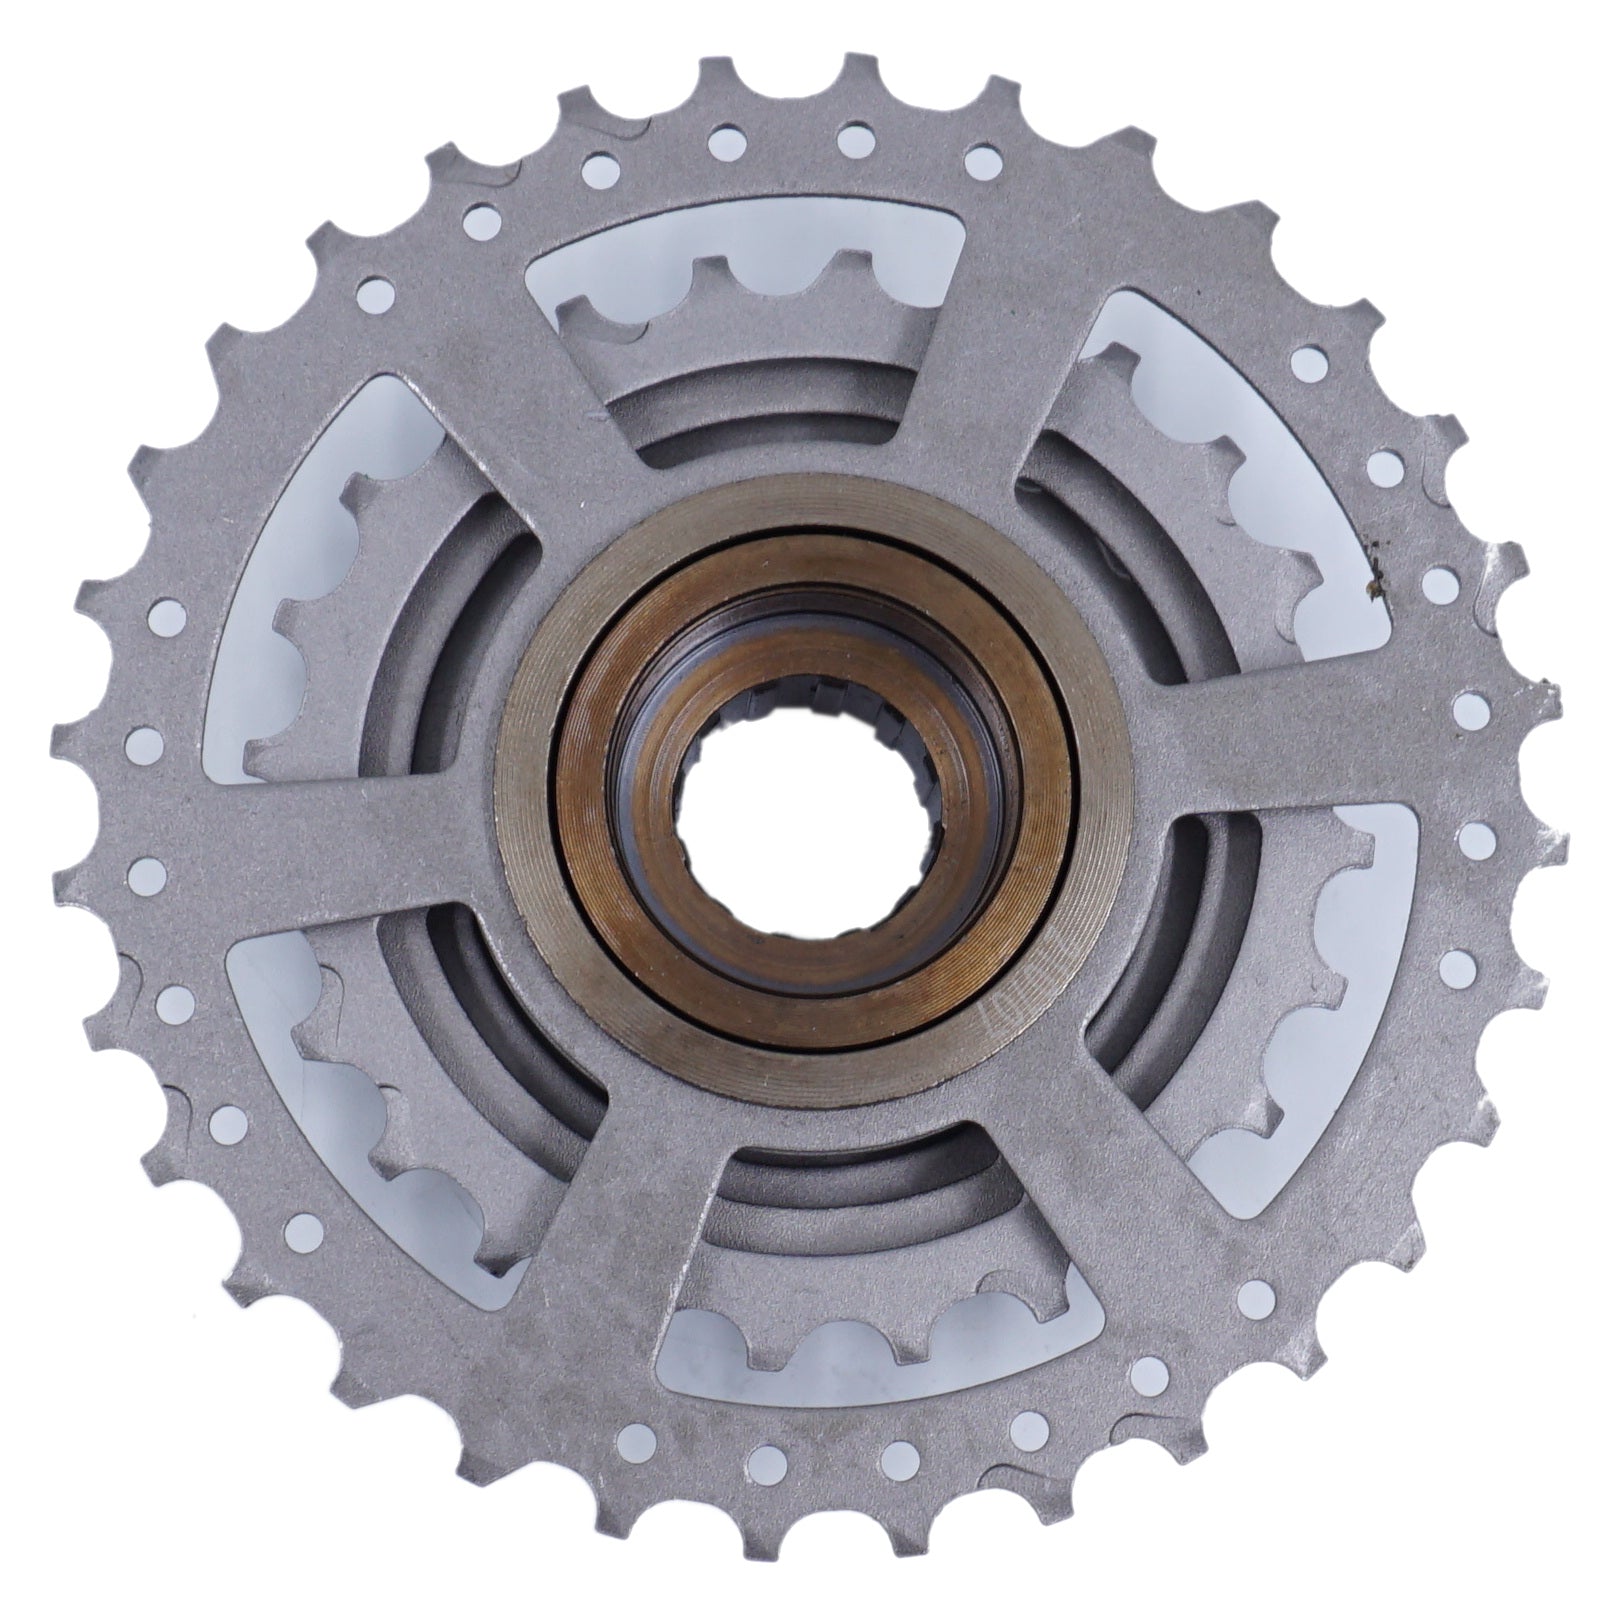 Sunlite 7 Speed 14-32t Freewheel - The Bikesmiths